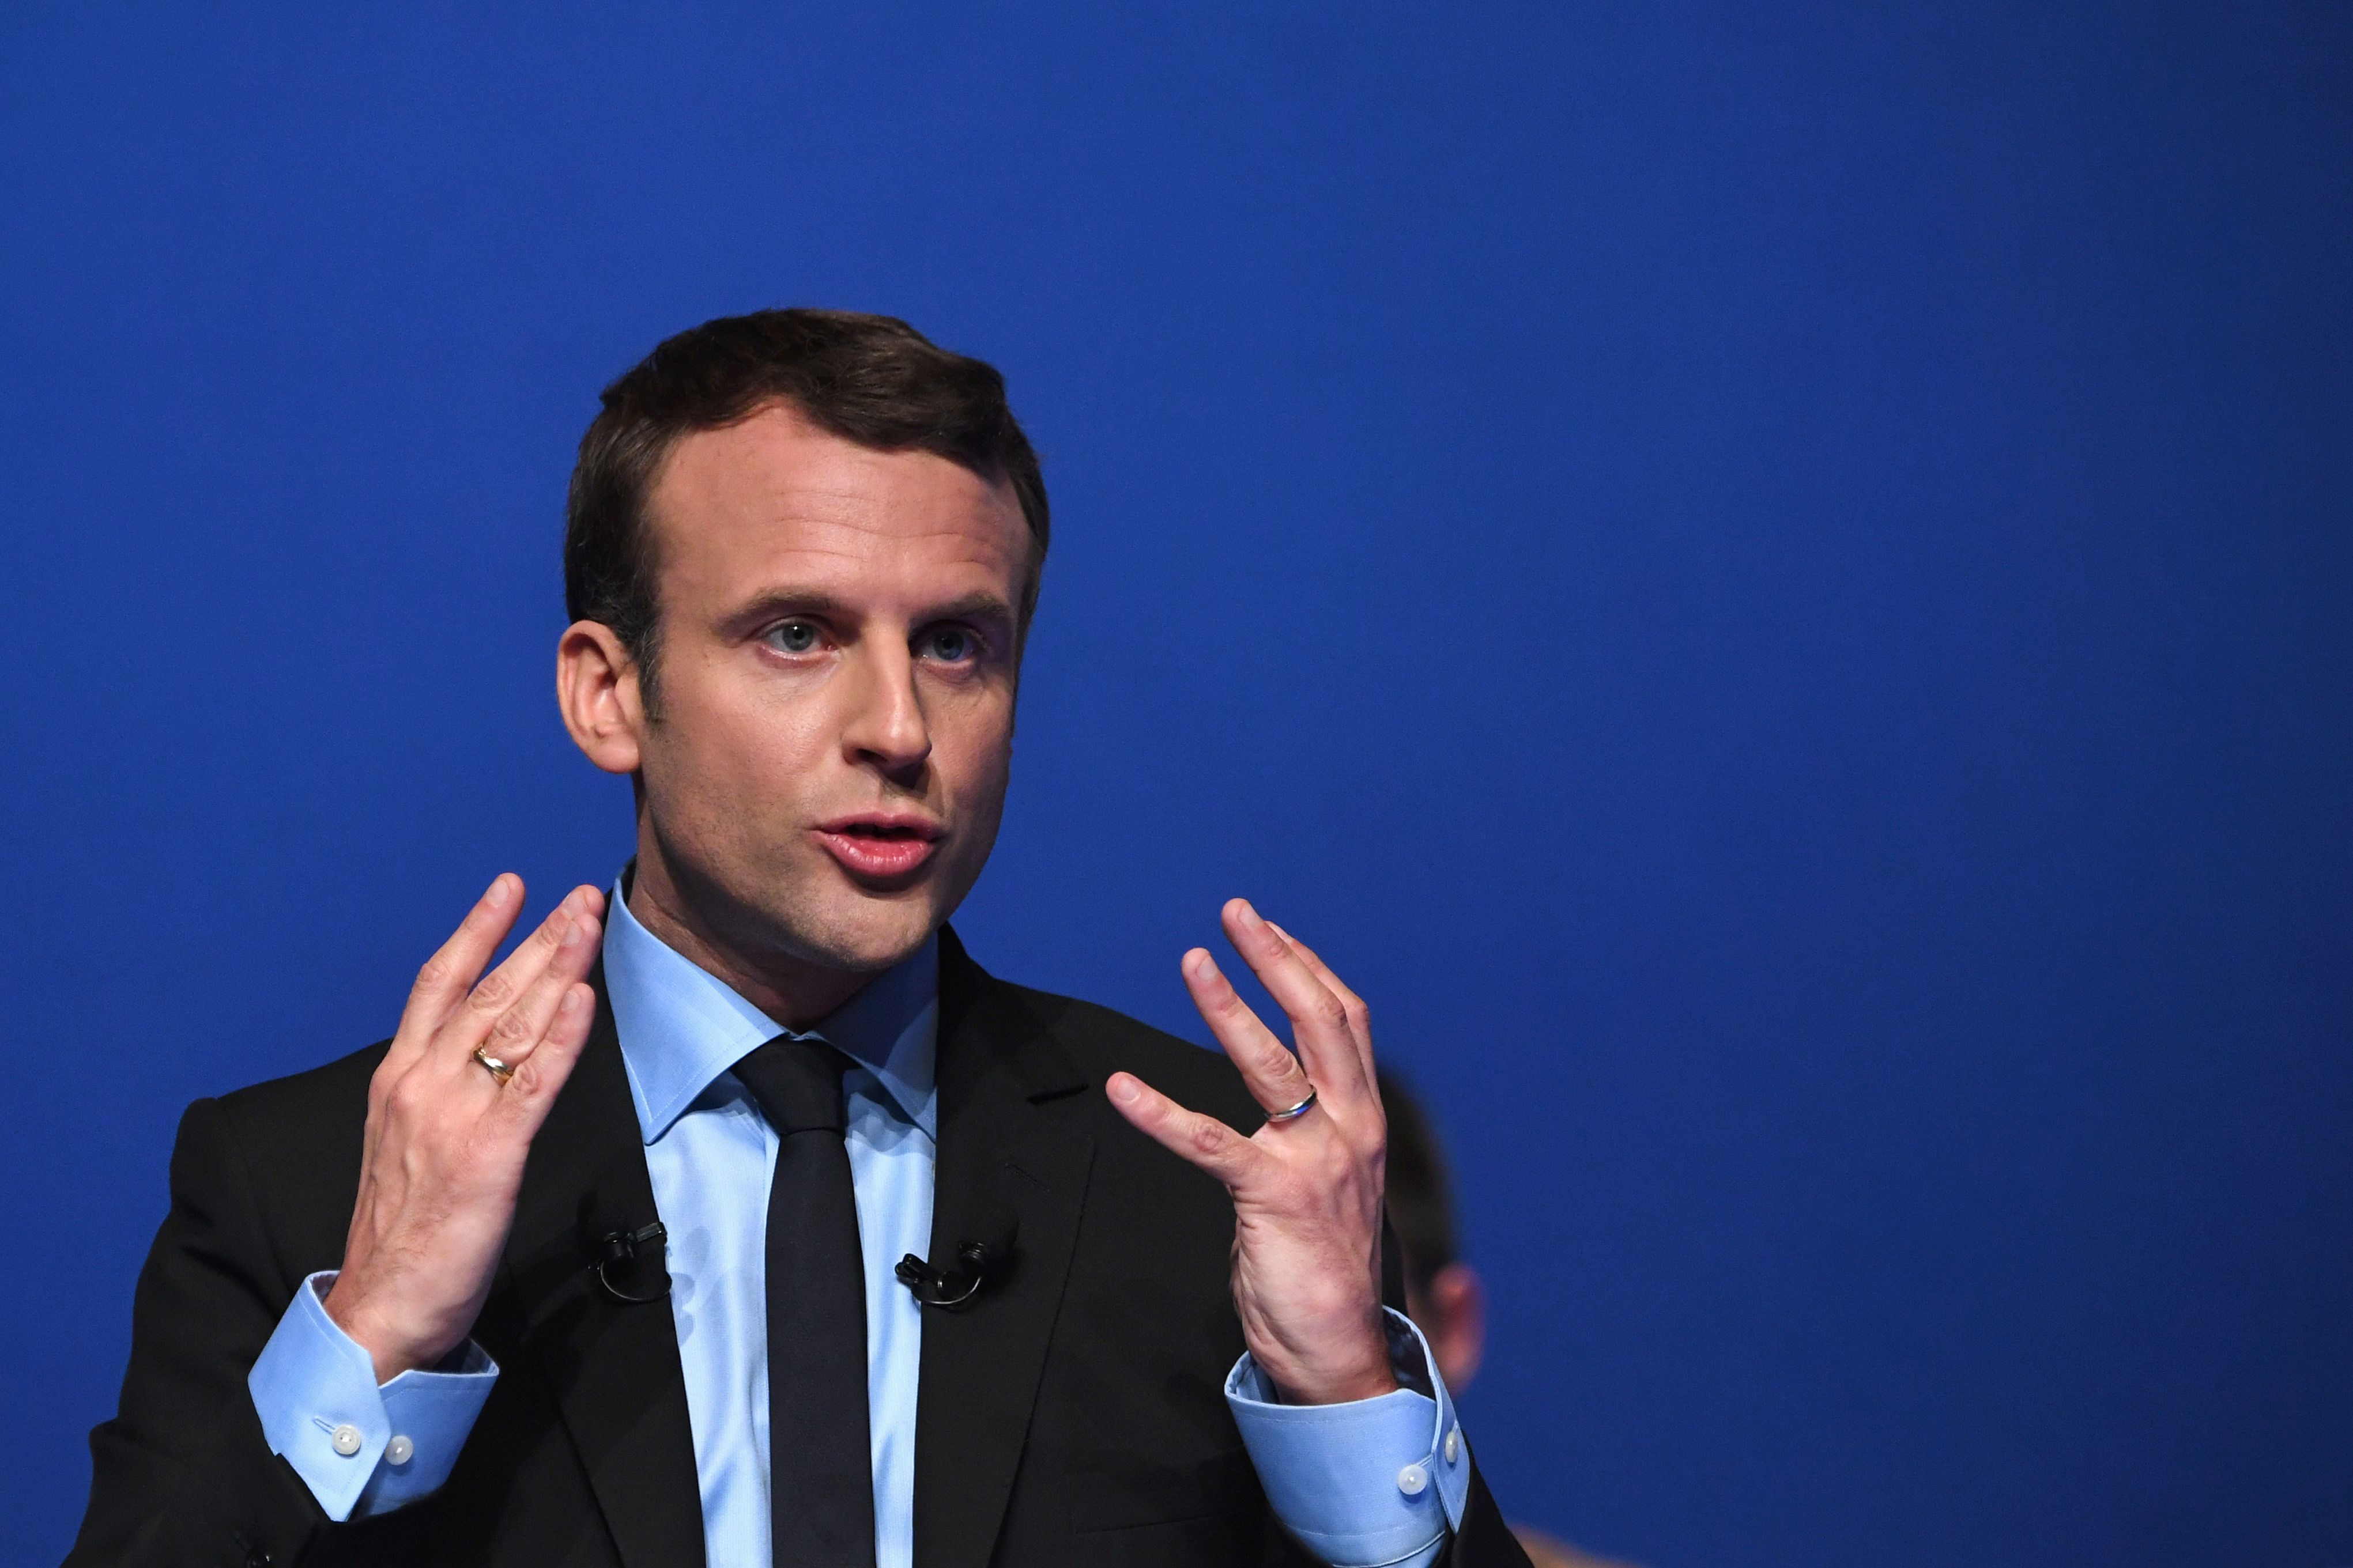 Emmanuel Macron s Political Positions 5 Fast Facts